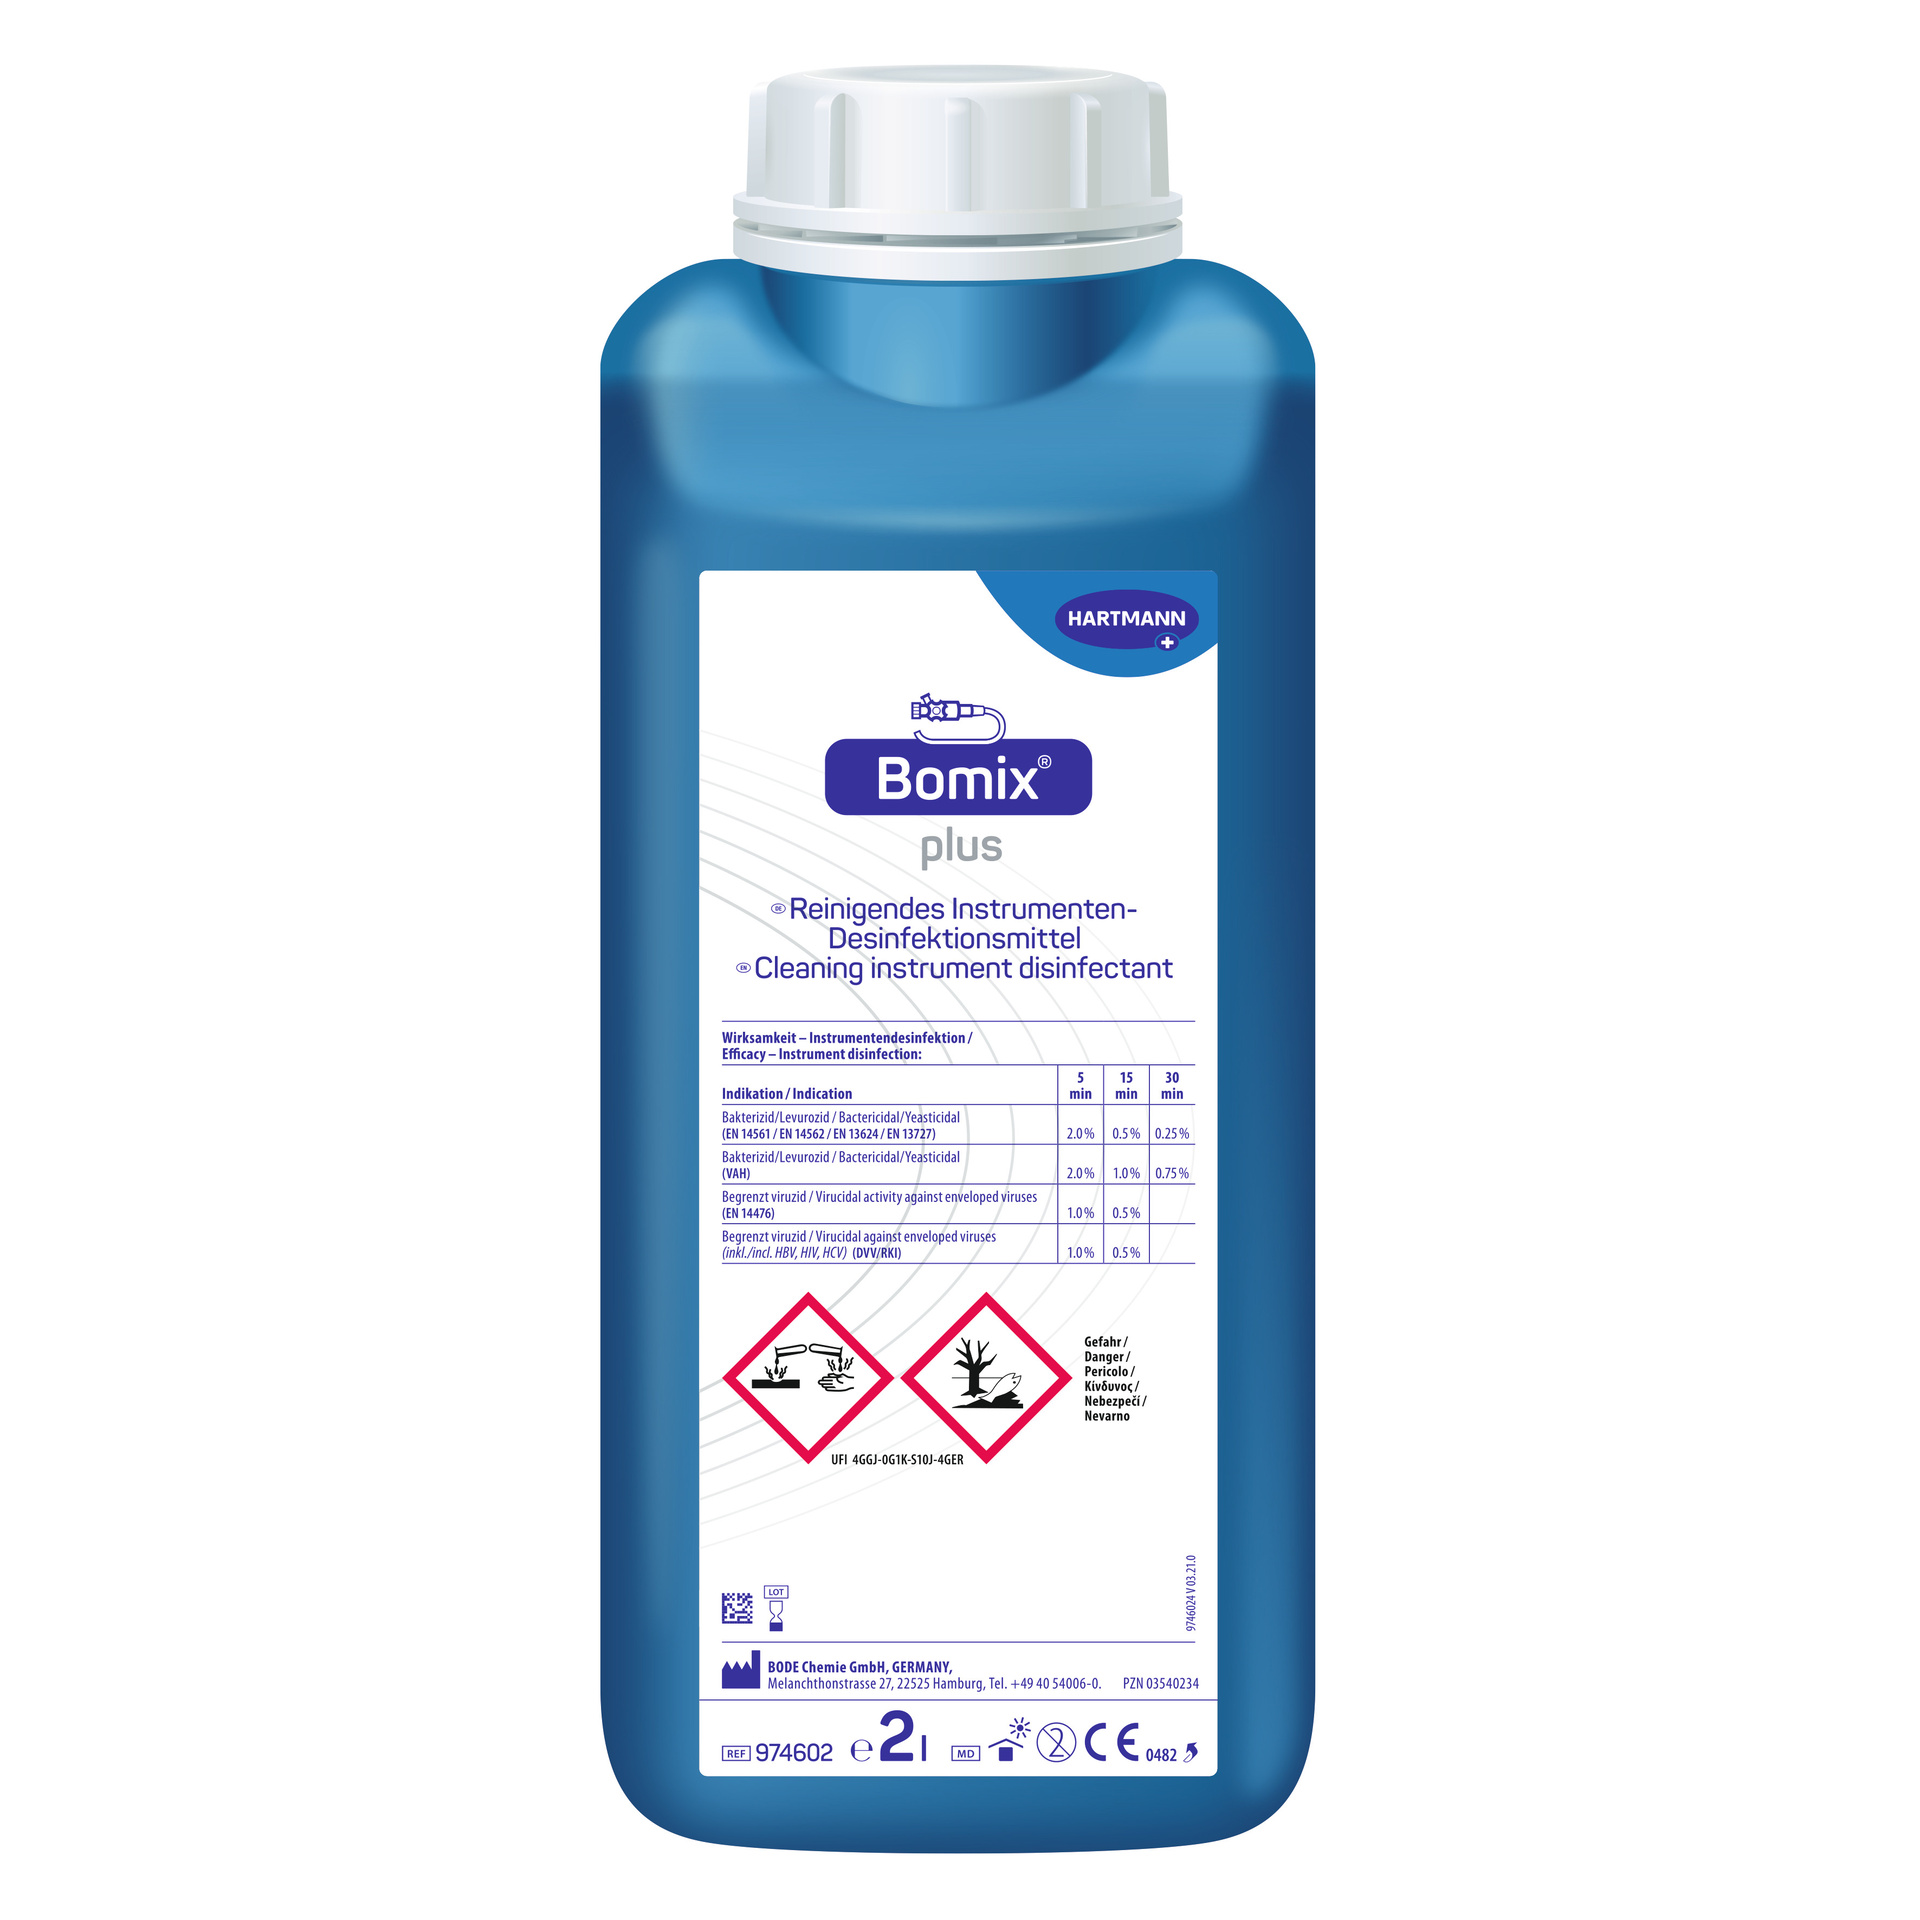 Bomix plus Instrumenten-Desinfektion, aldehydfrei, 2 L, 1 Stck.